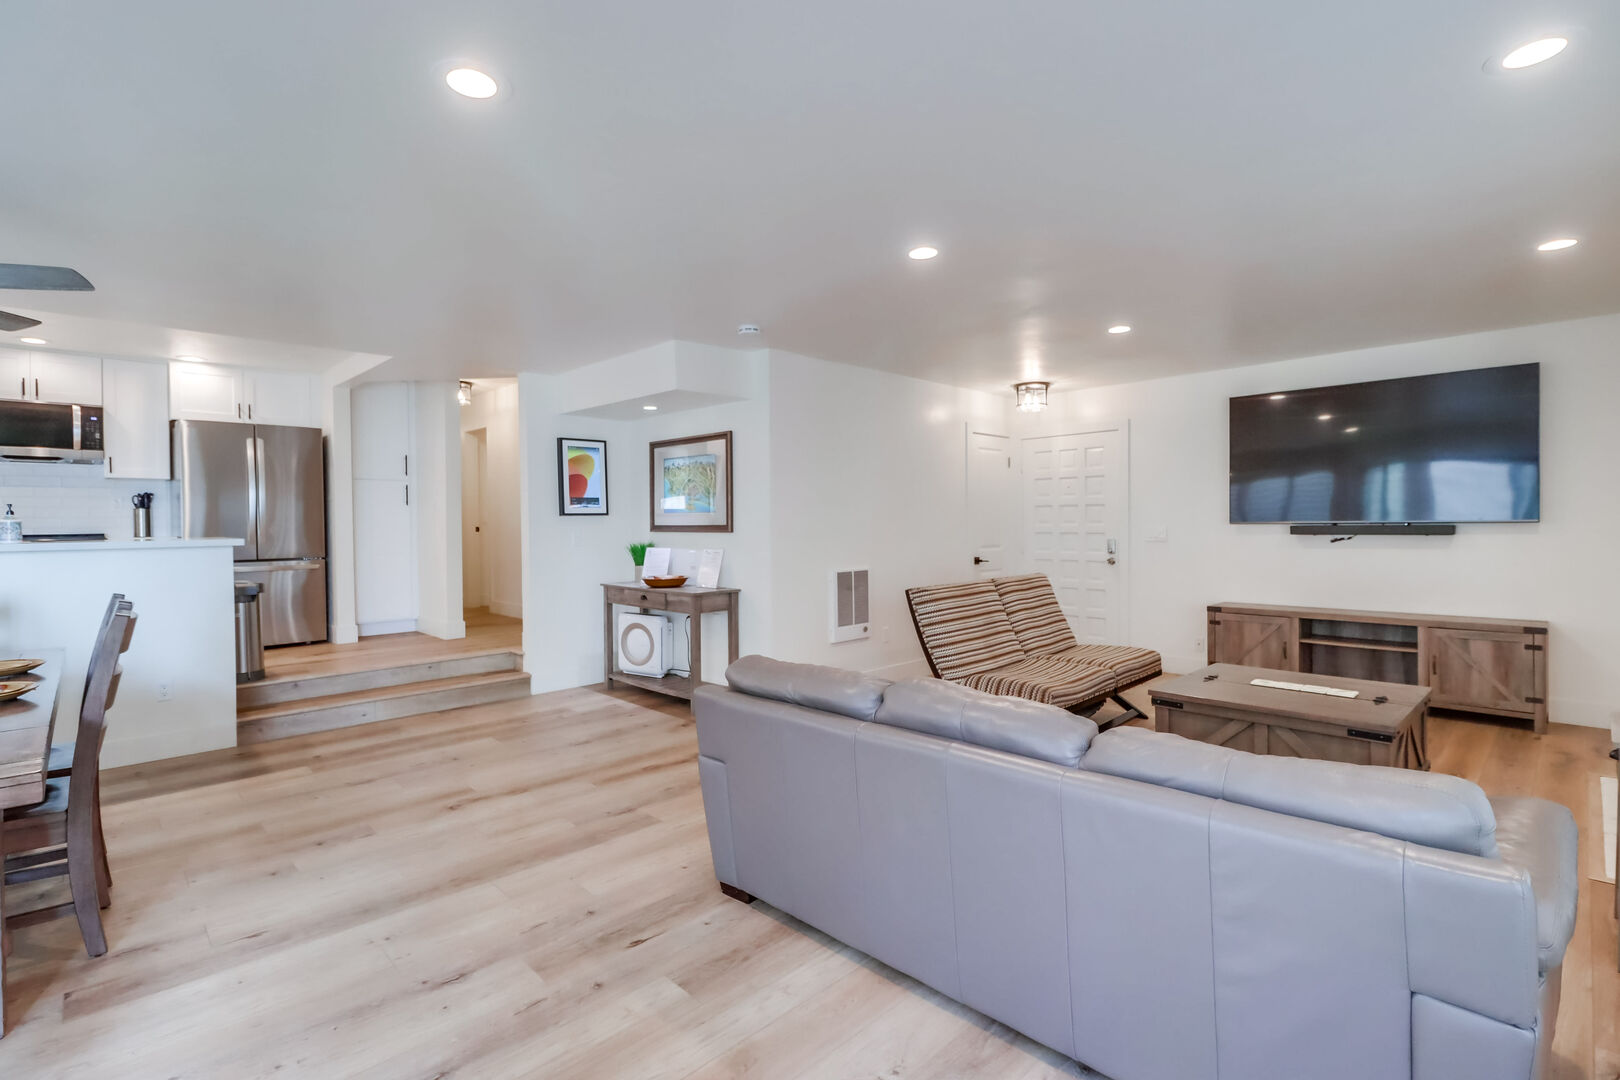 Open floor plan with new flooring, furniture, and overhead lighting!